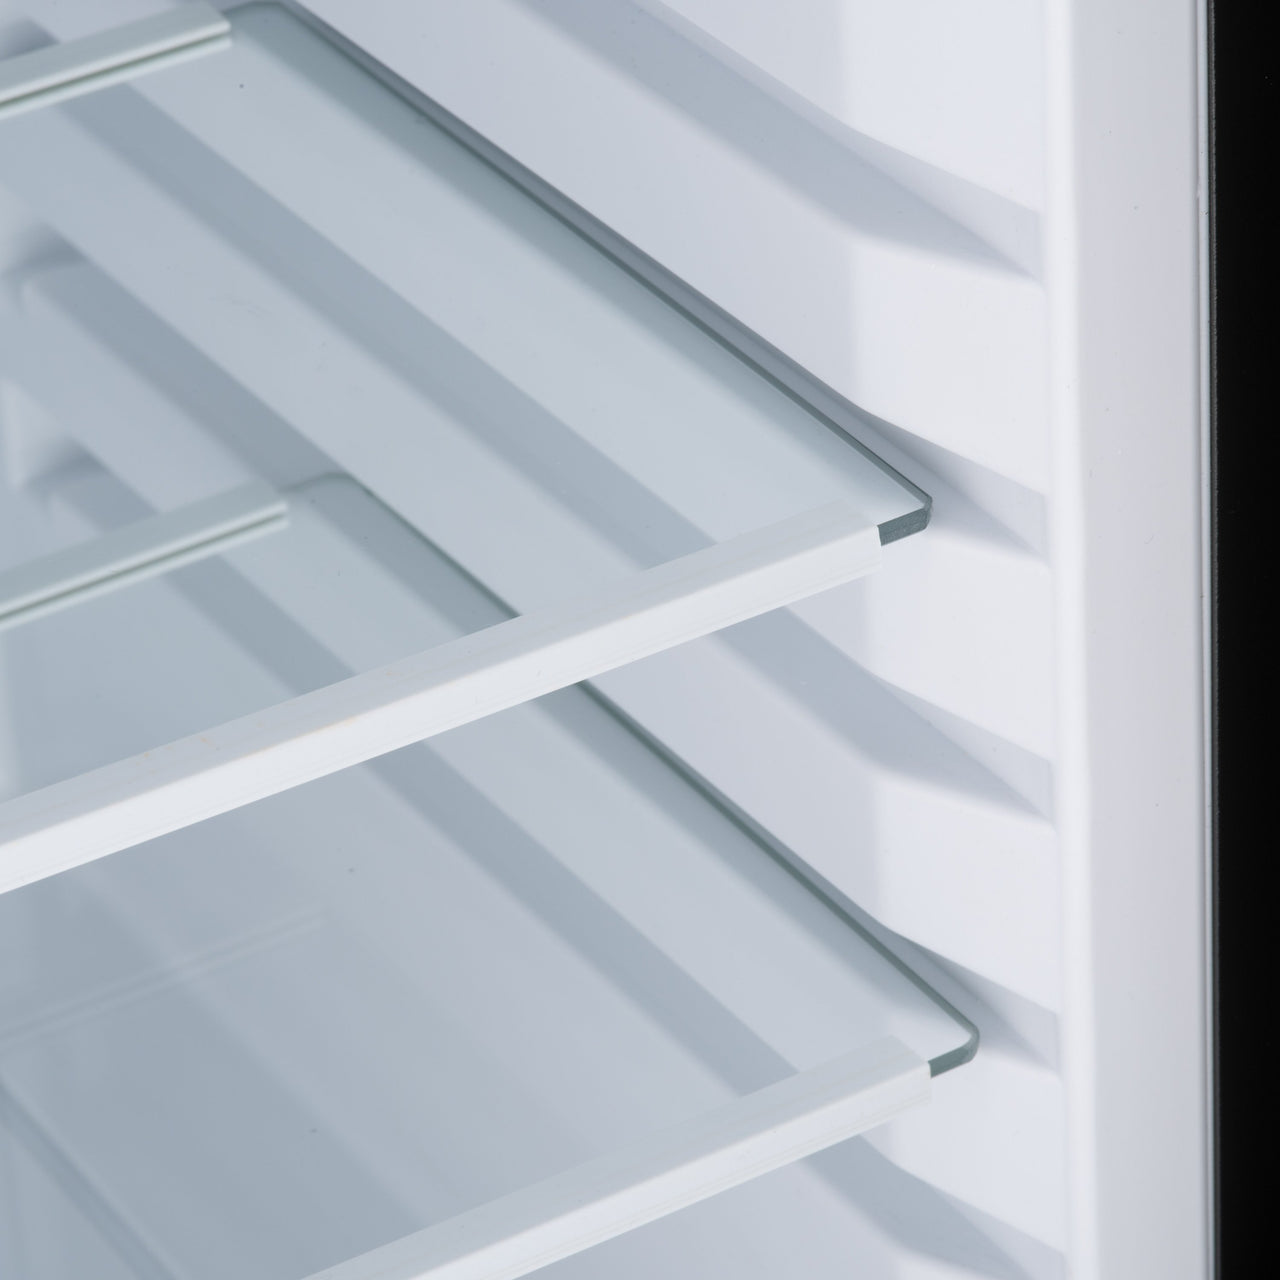 Mini bar fridge 40 litre internal adjustable shelves